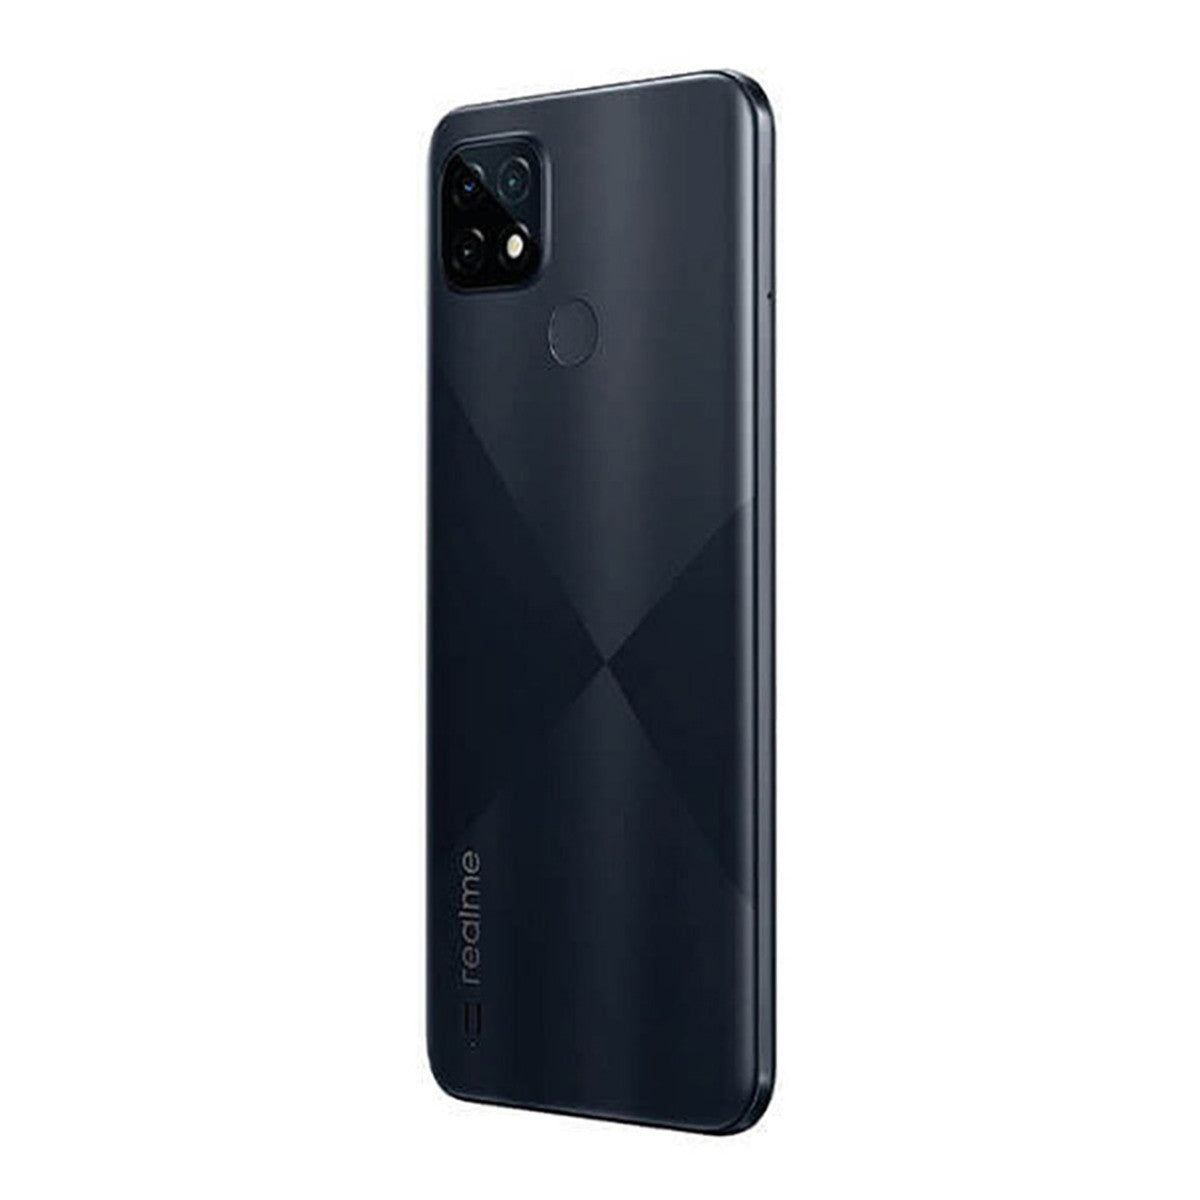 Realme C21 4GB/64GB Negro (Cross Black) Dual SIM RMX3201 Smartphone | Realme